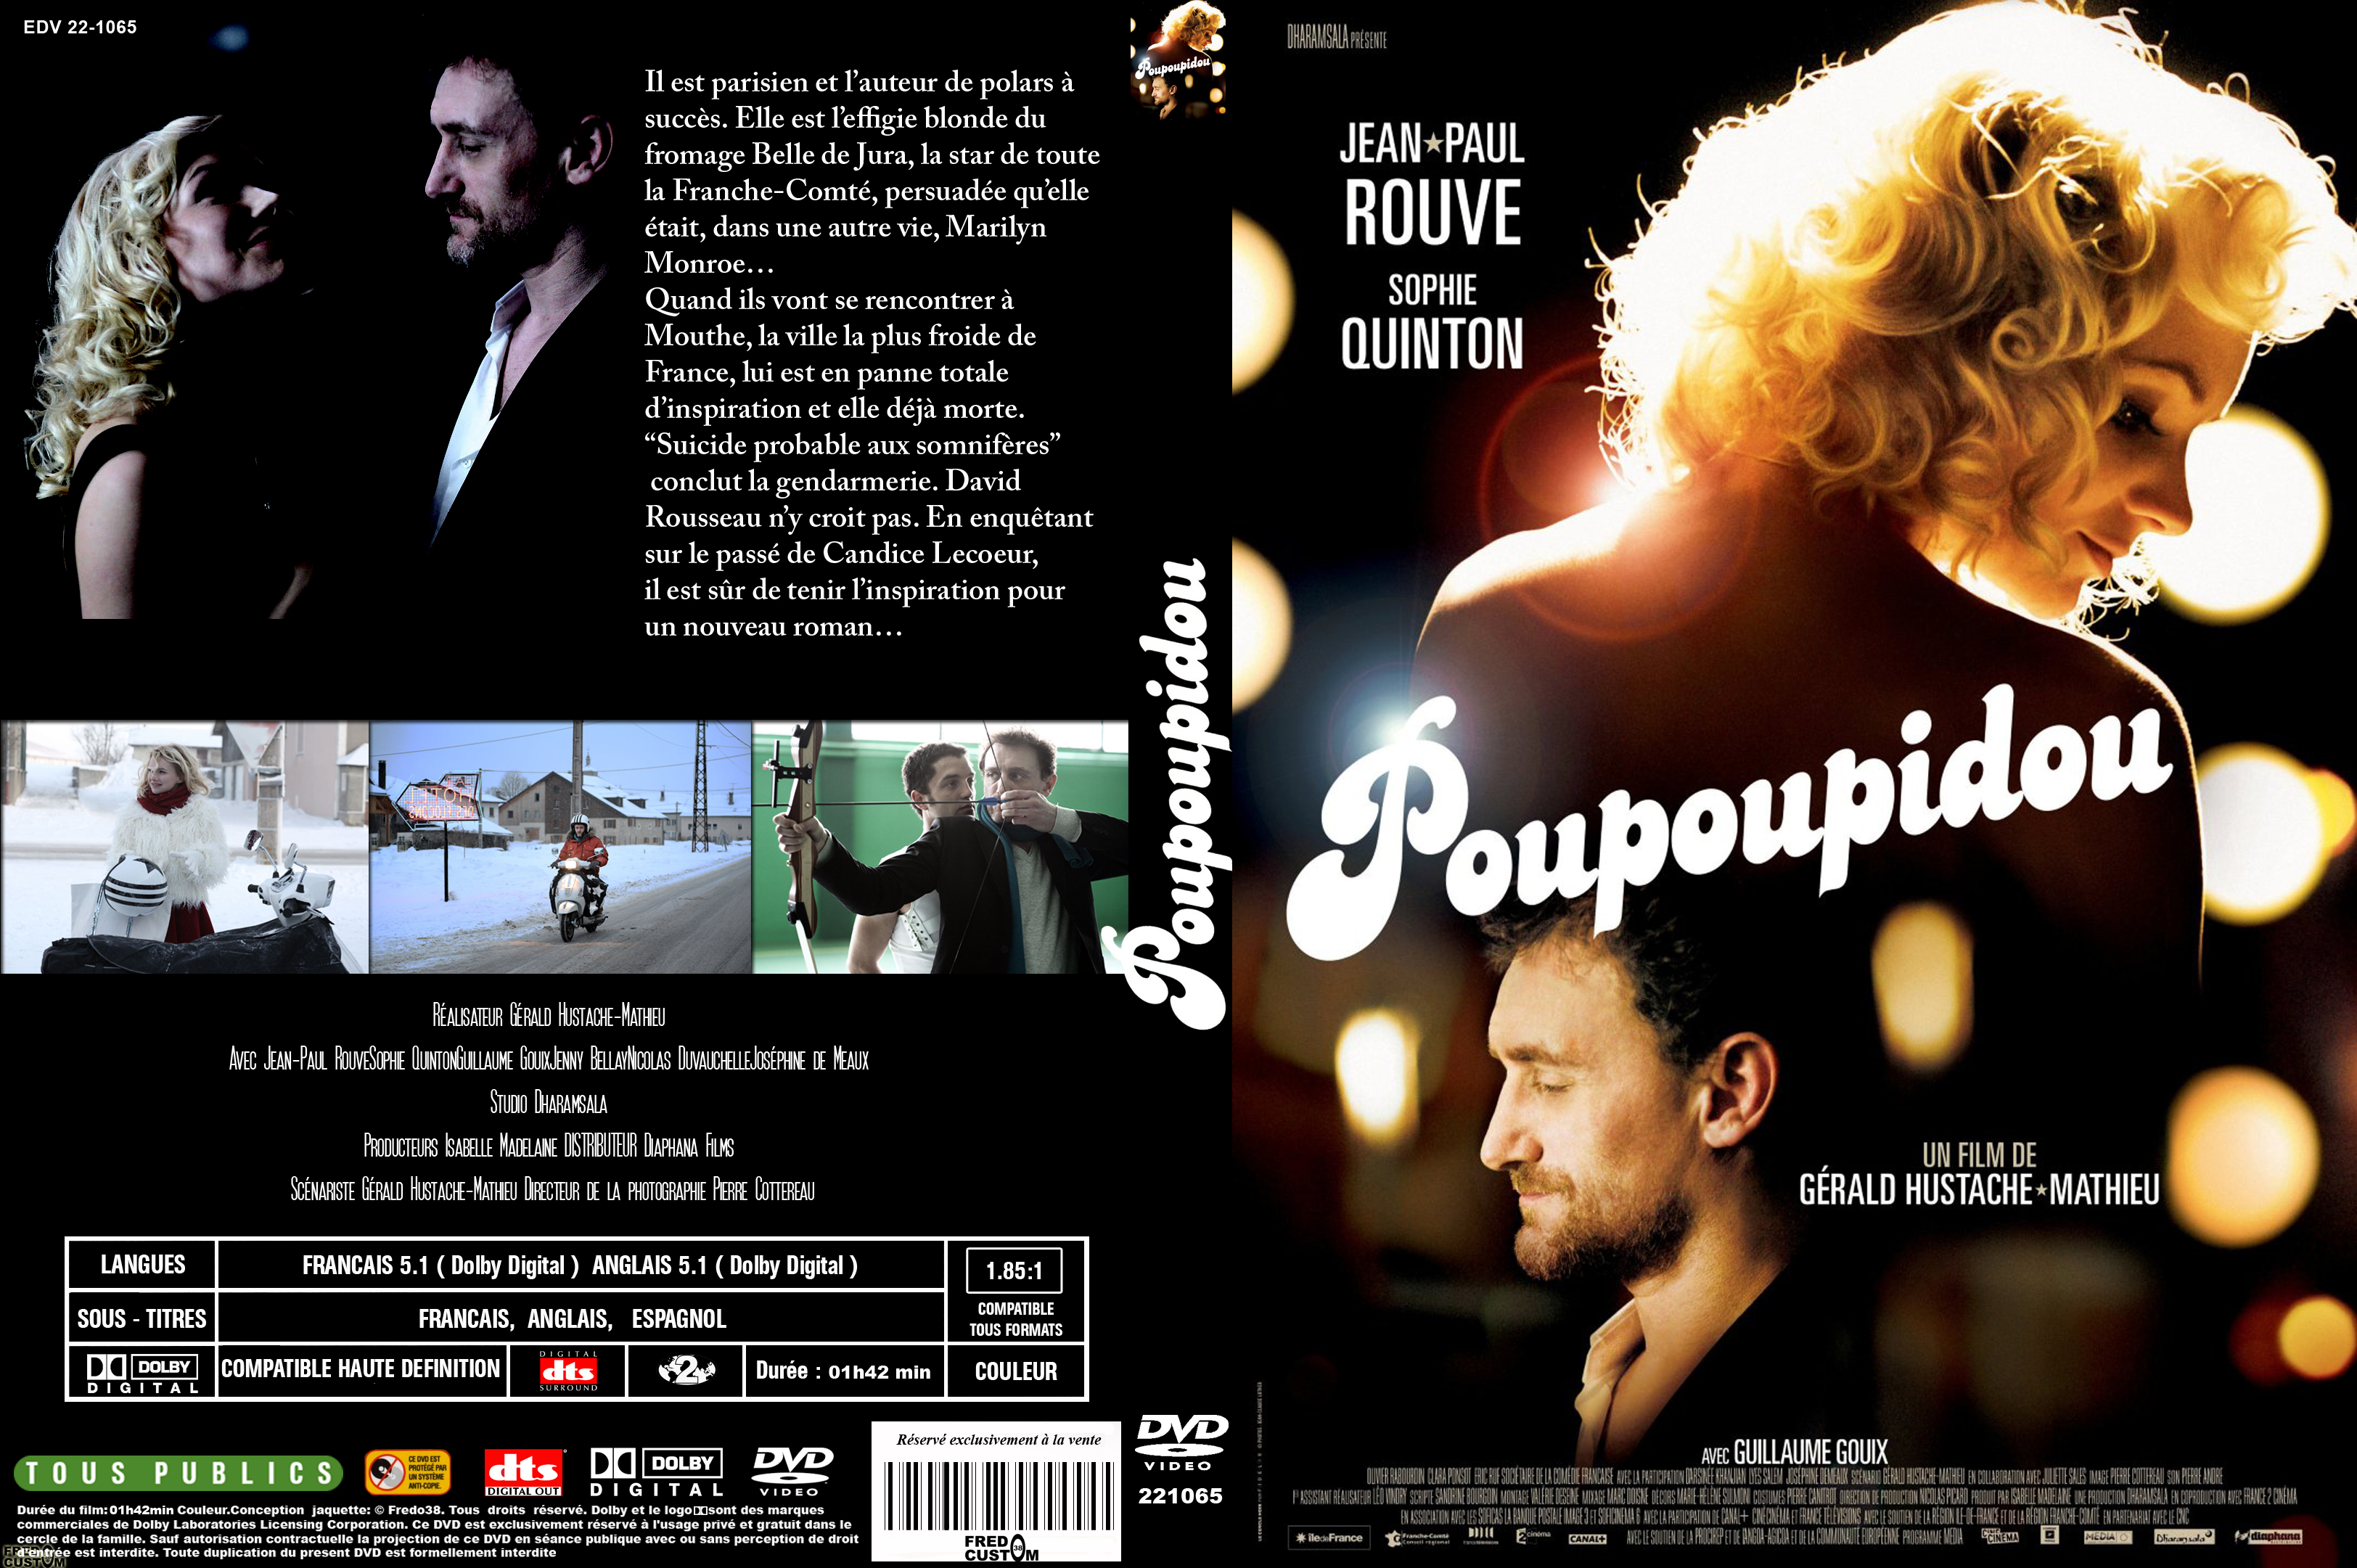 Jaquette DVD Poupoupidou custom